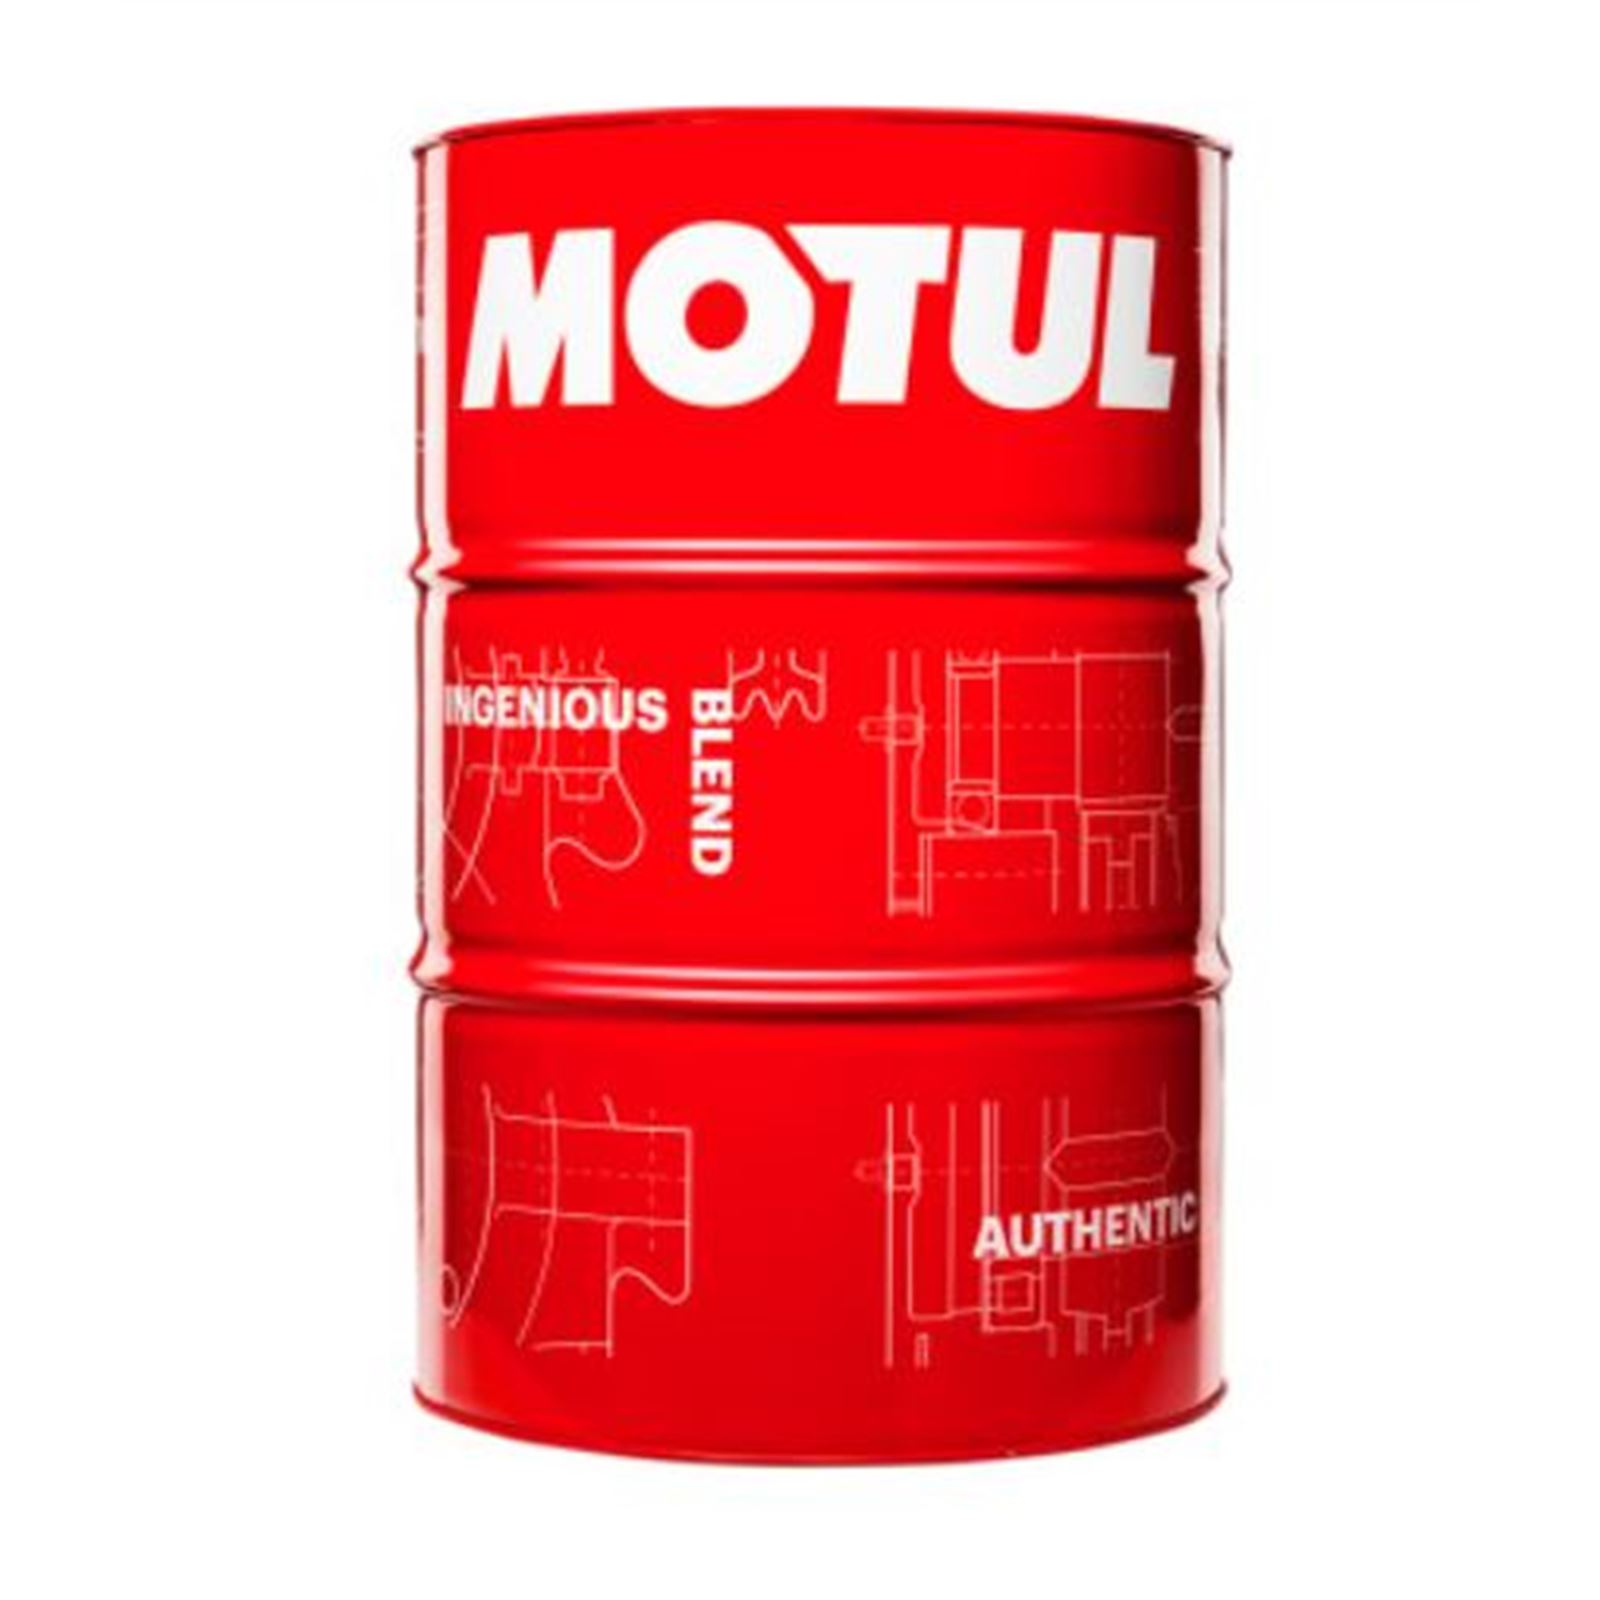 Motul 3000 Petroleum Oil 10W-40 - 55 Gallon Drum